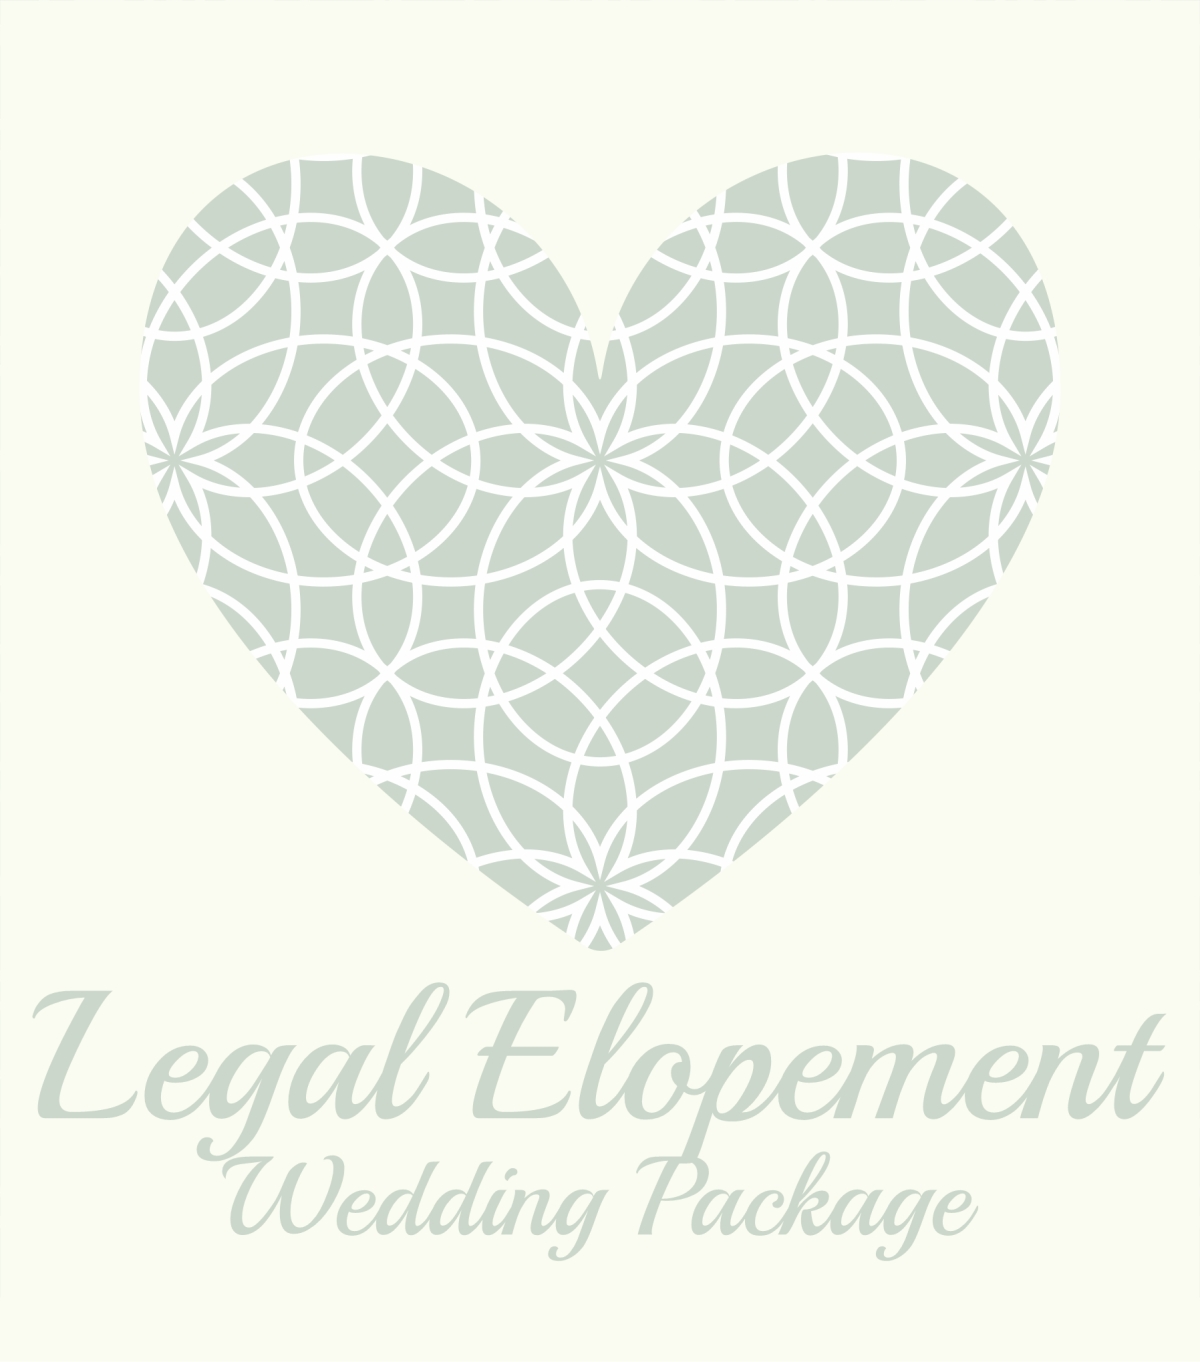 Legal Elopement Wedding Package